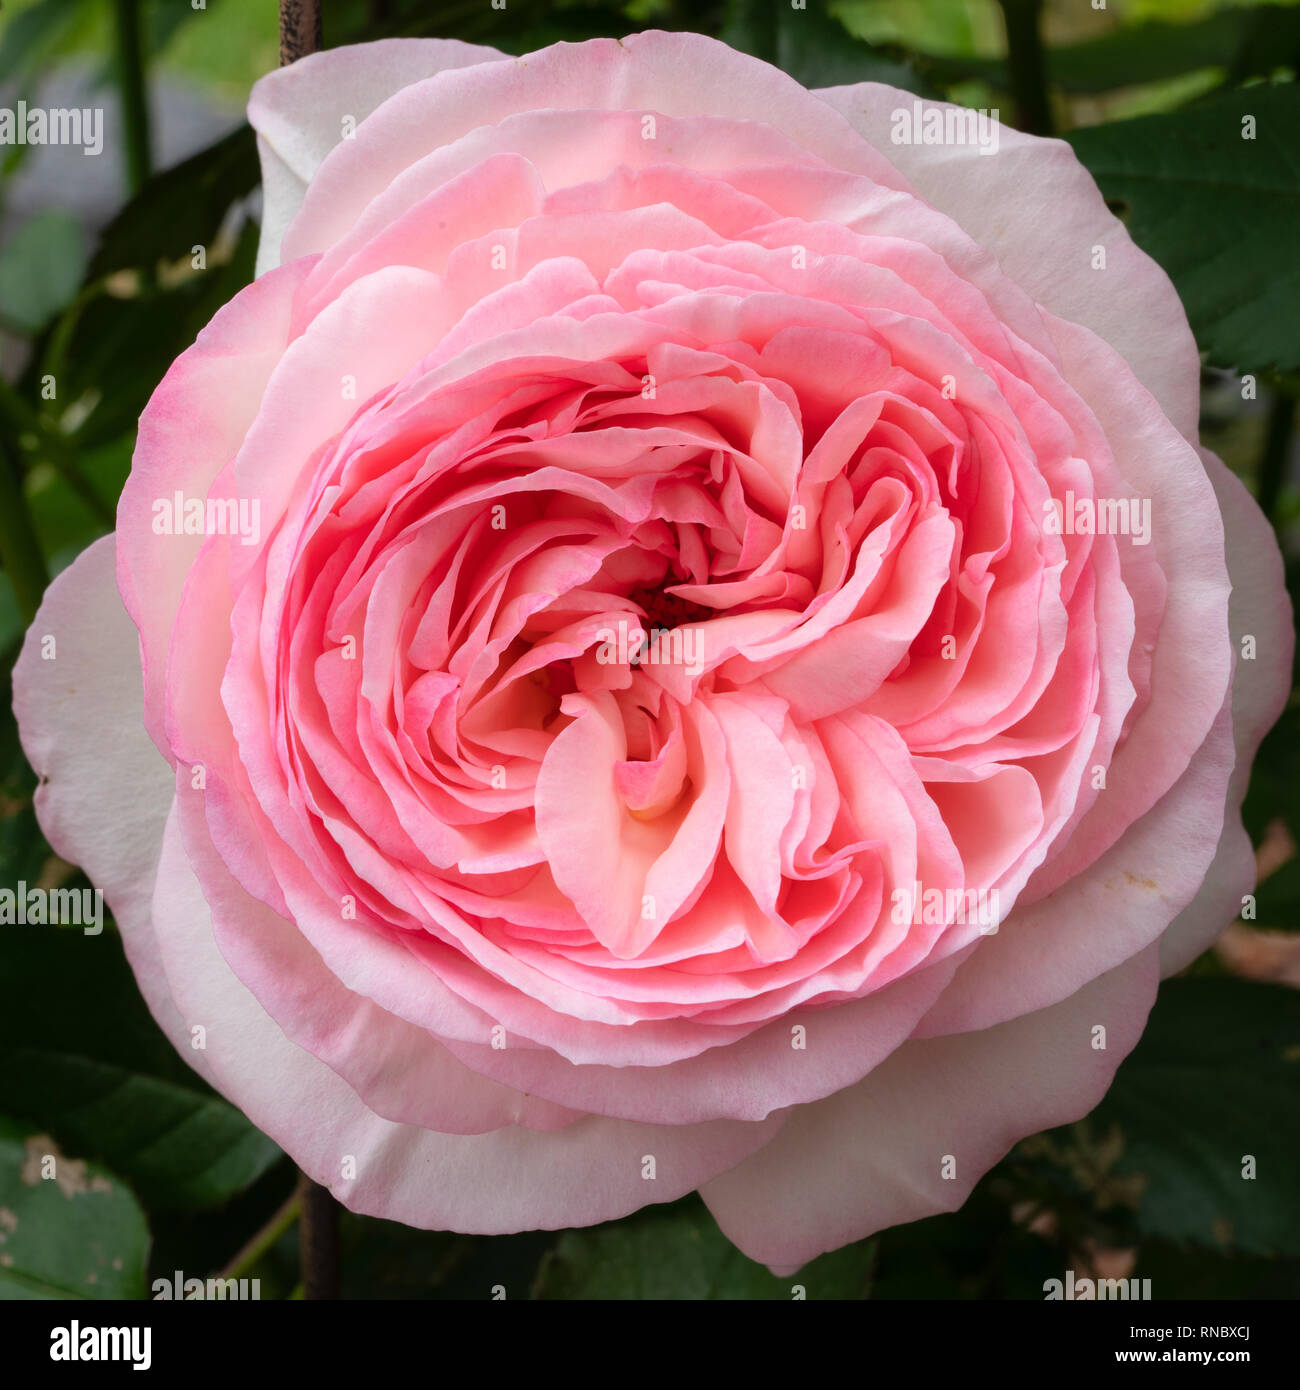 Shrub rose 'Eden rose 85' (Rosa), close up of the flower head Stock Photo